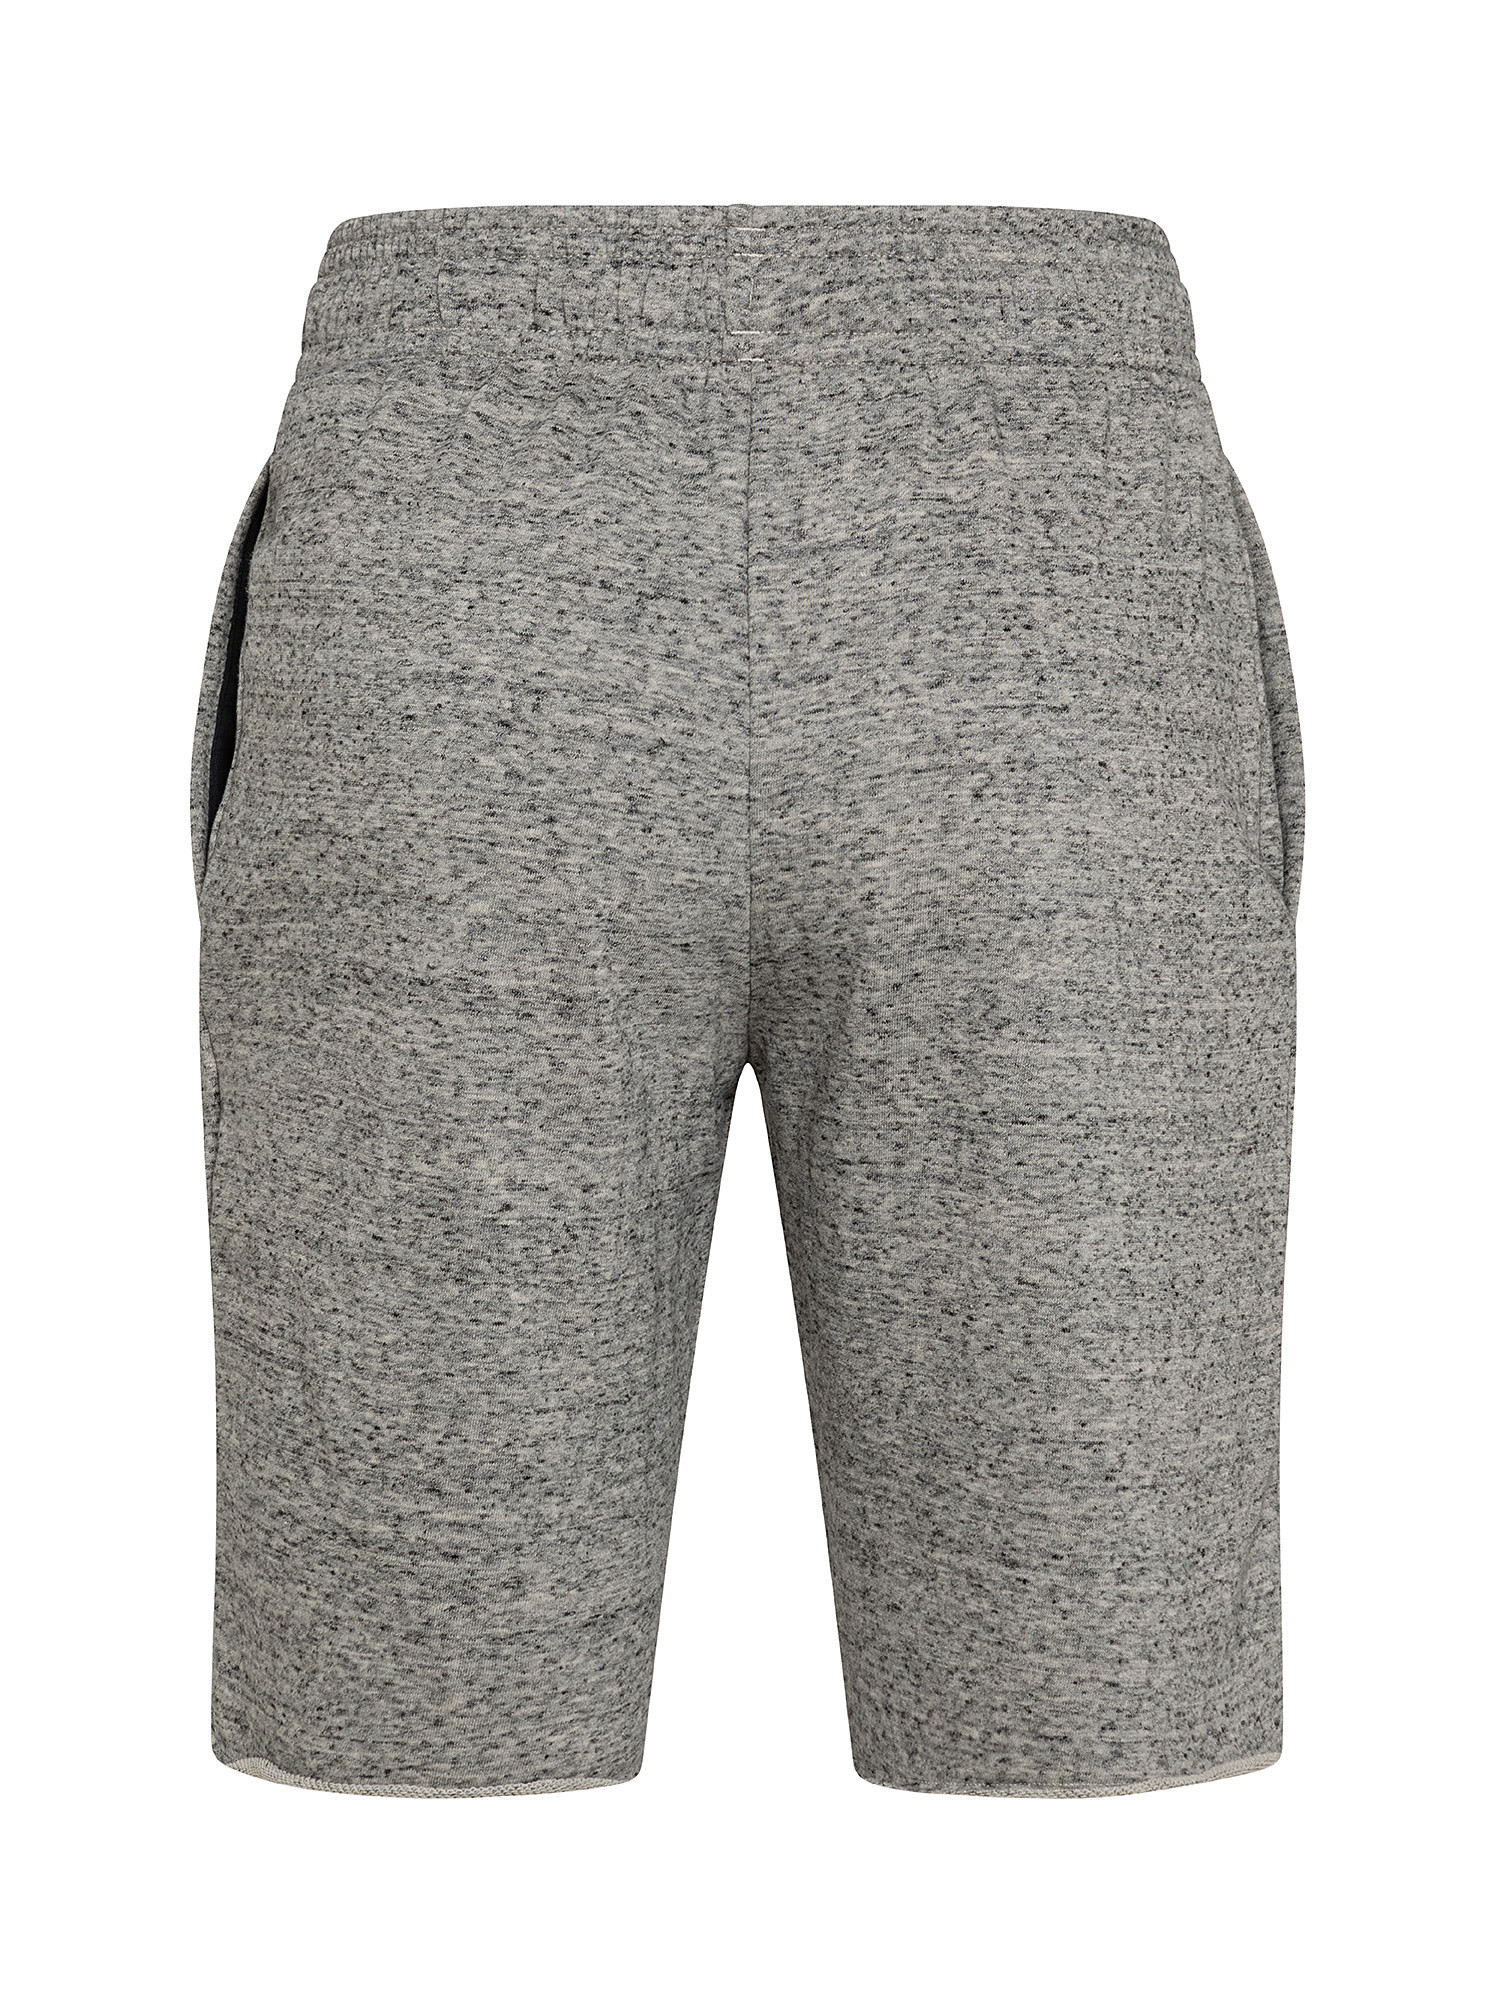 Shorts UA Terrain Woven, Grey, large image number 1